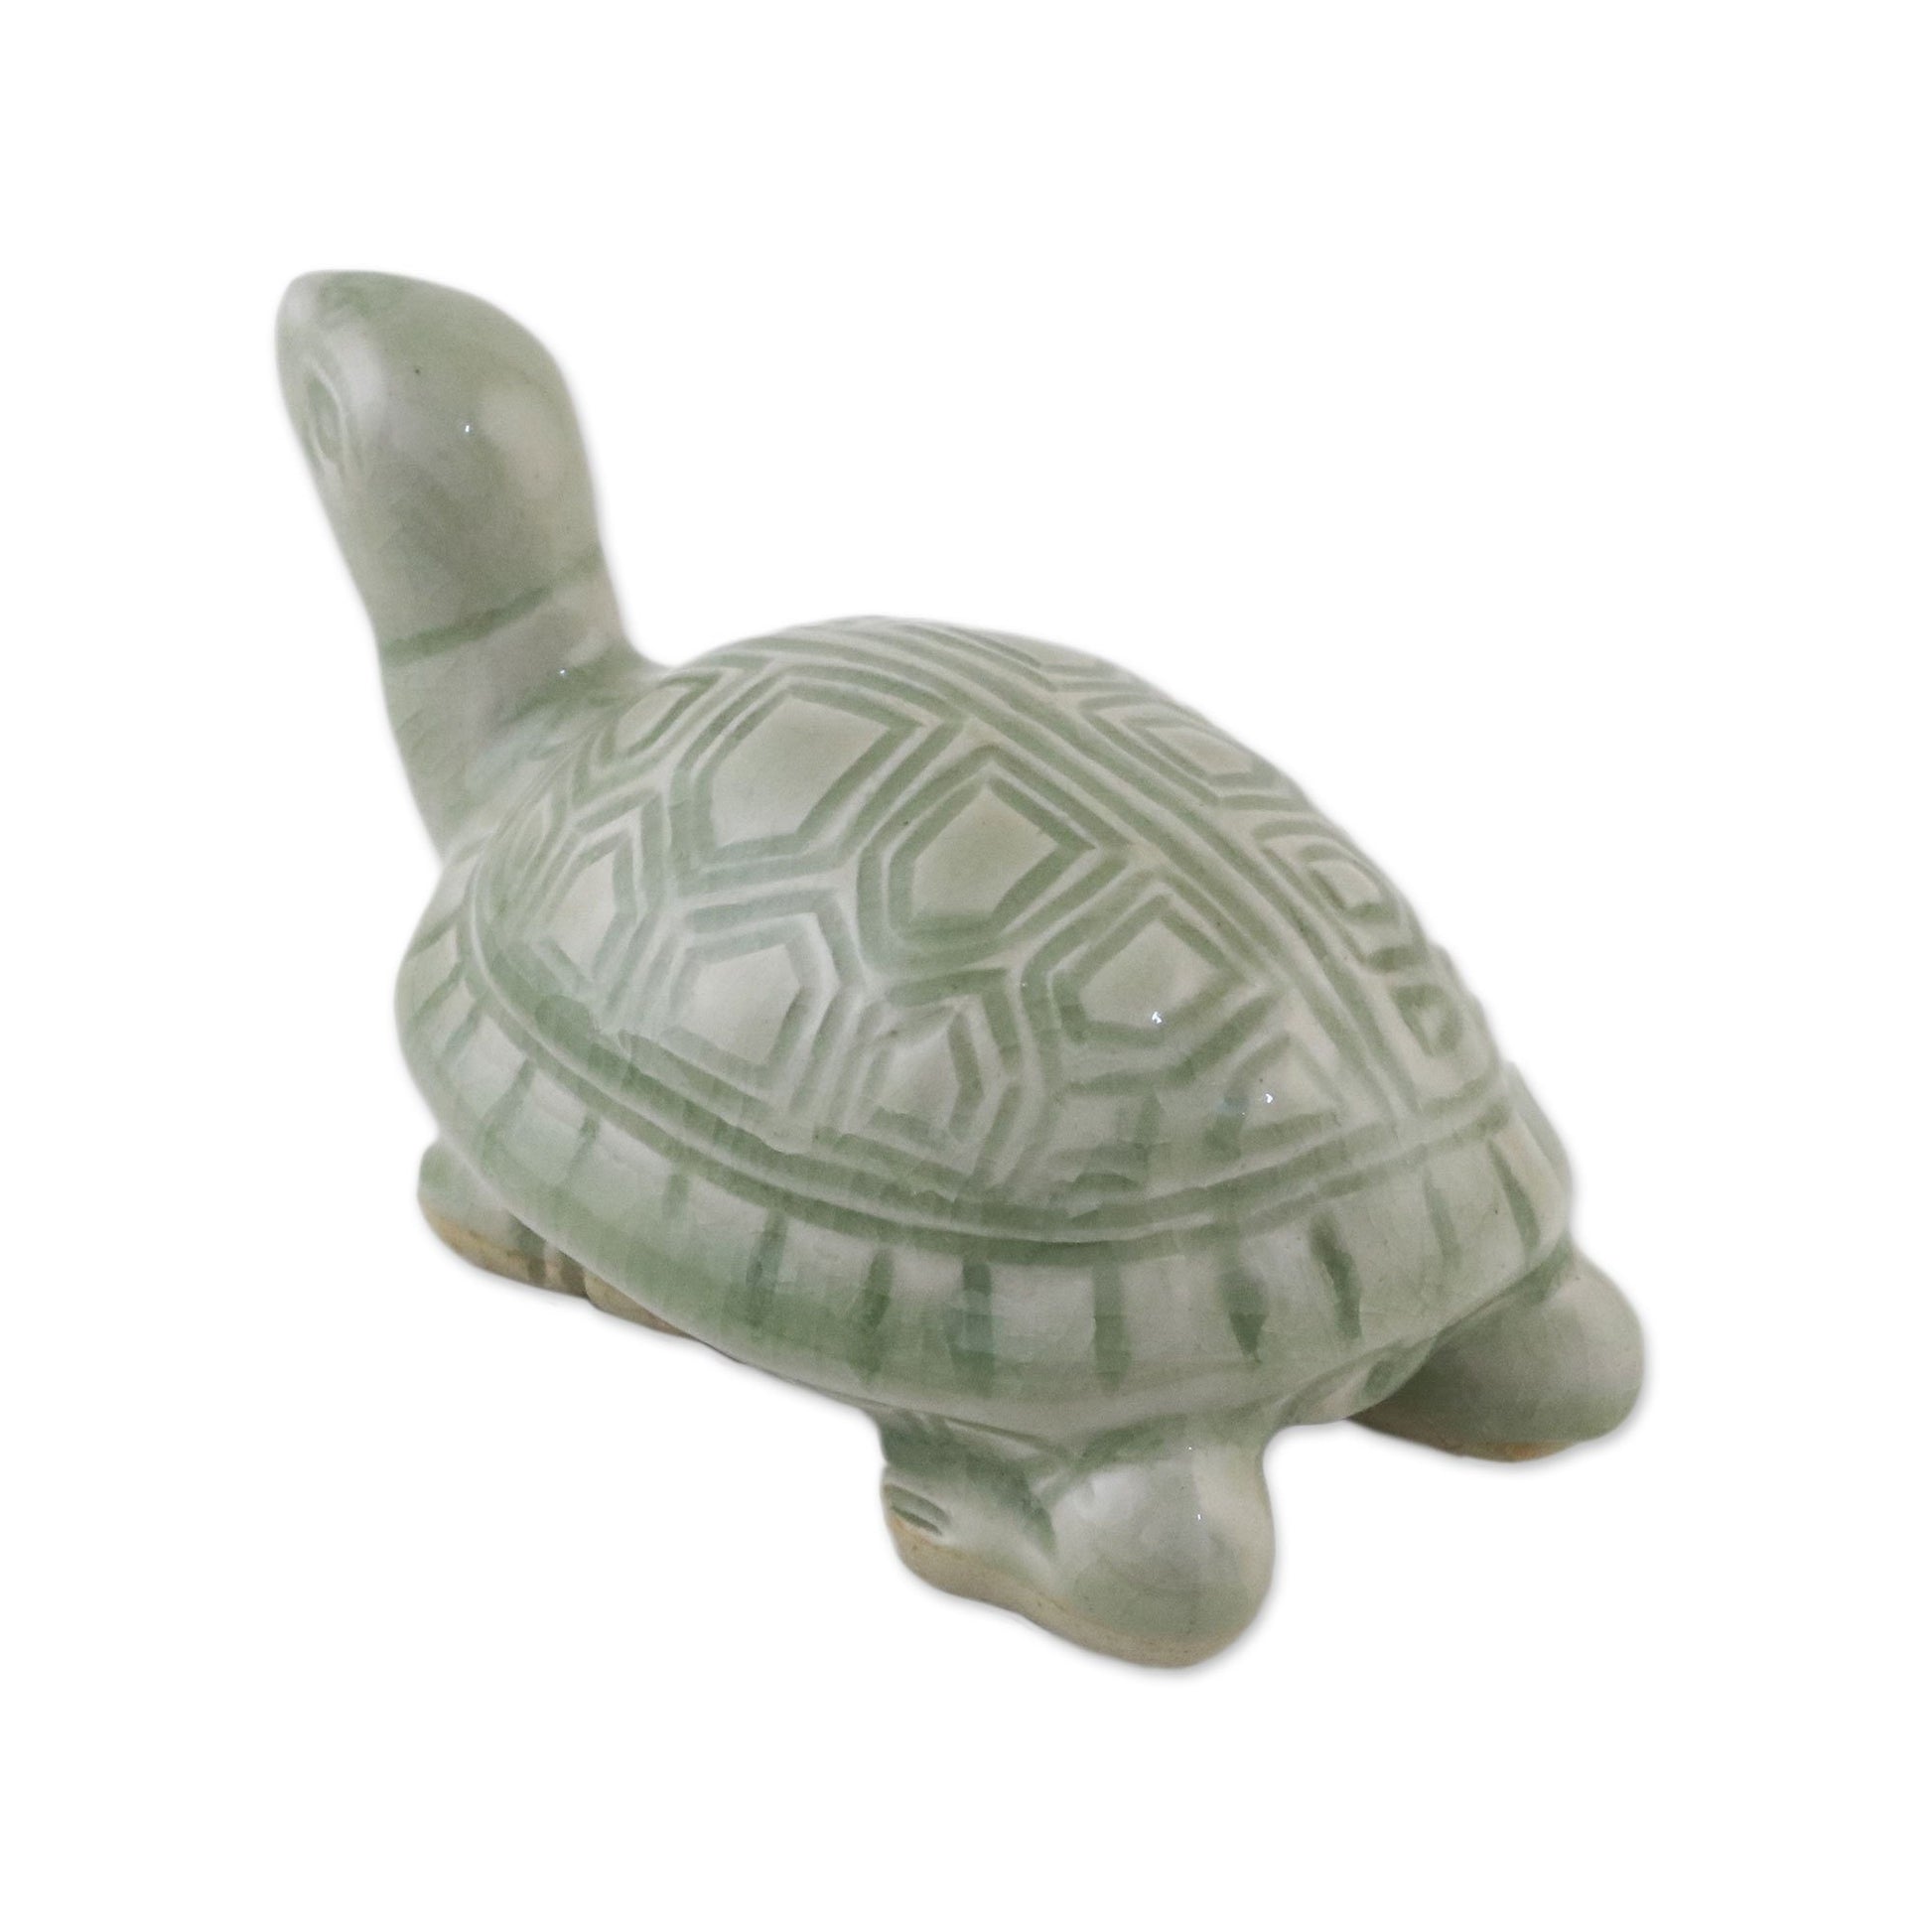 NOVICA - Celadon Ceramic Turtle Sculpture Set